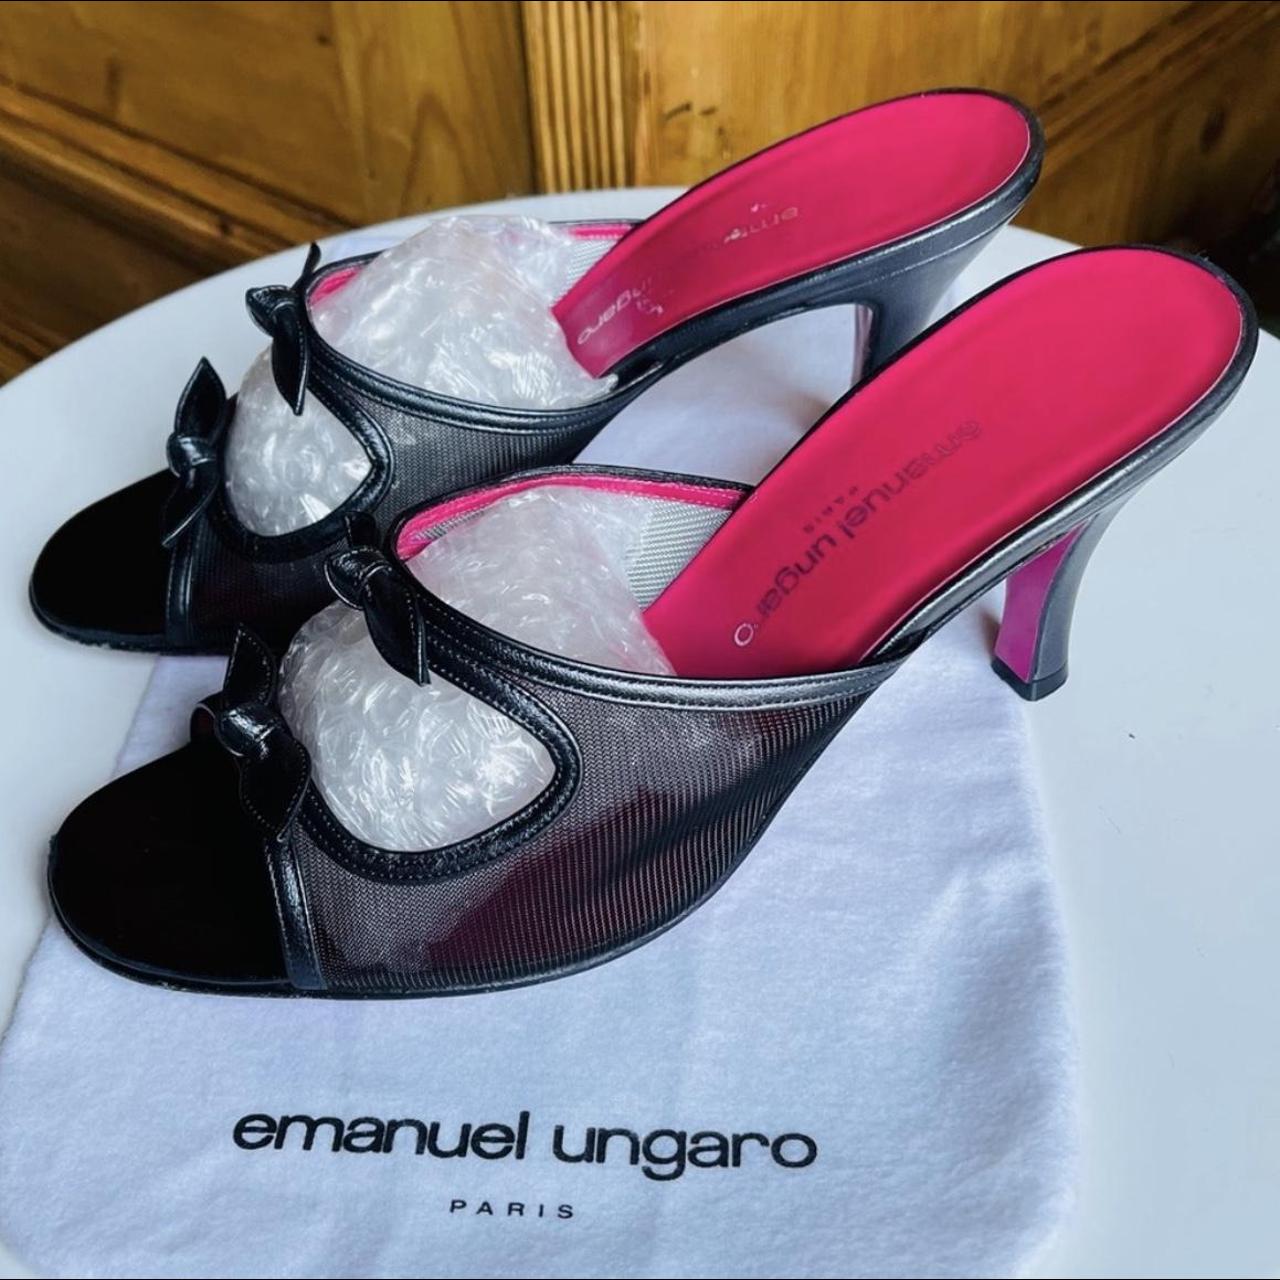 Emanuel Ungaro Women's Black and Silver Mules